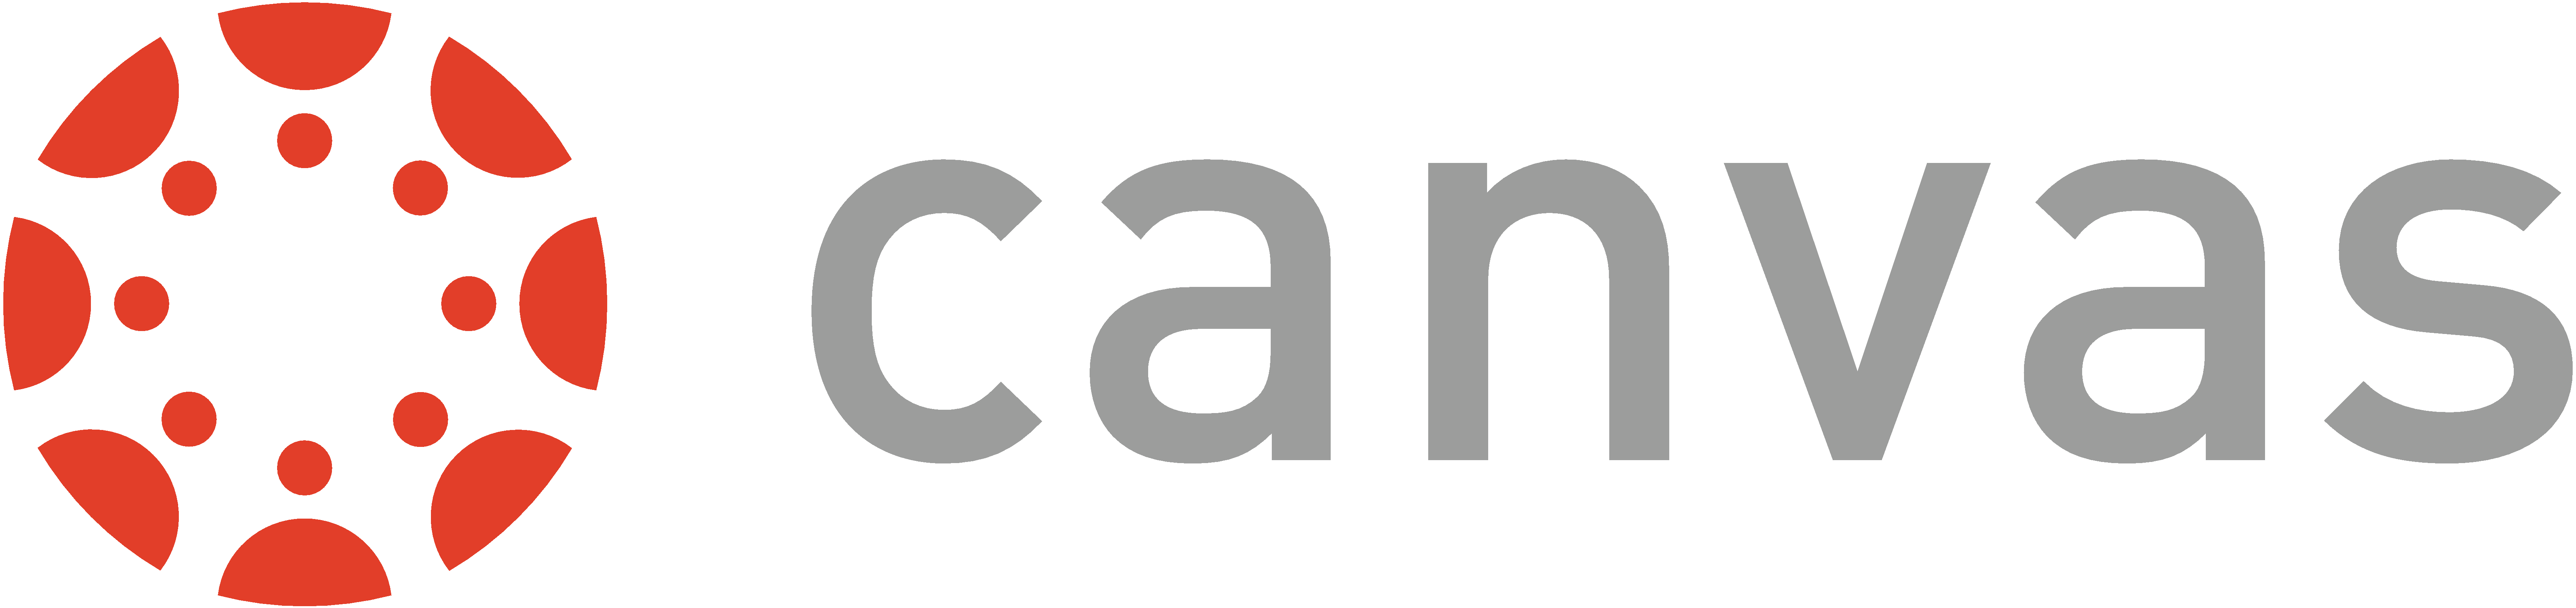 canvas-app.png